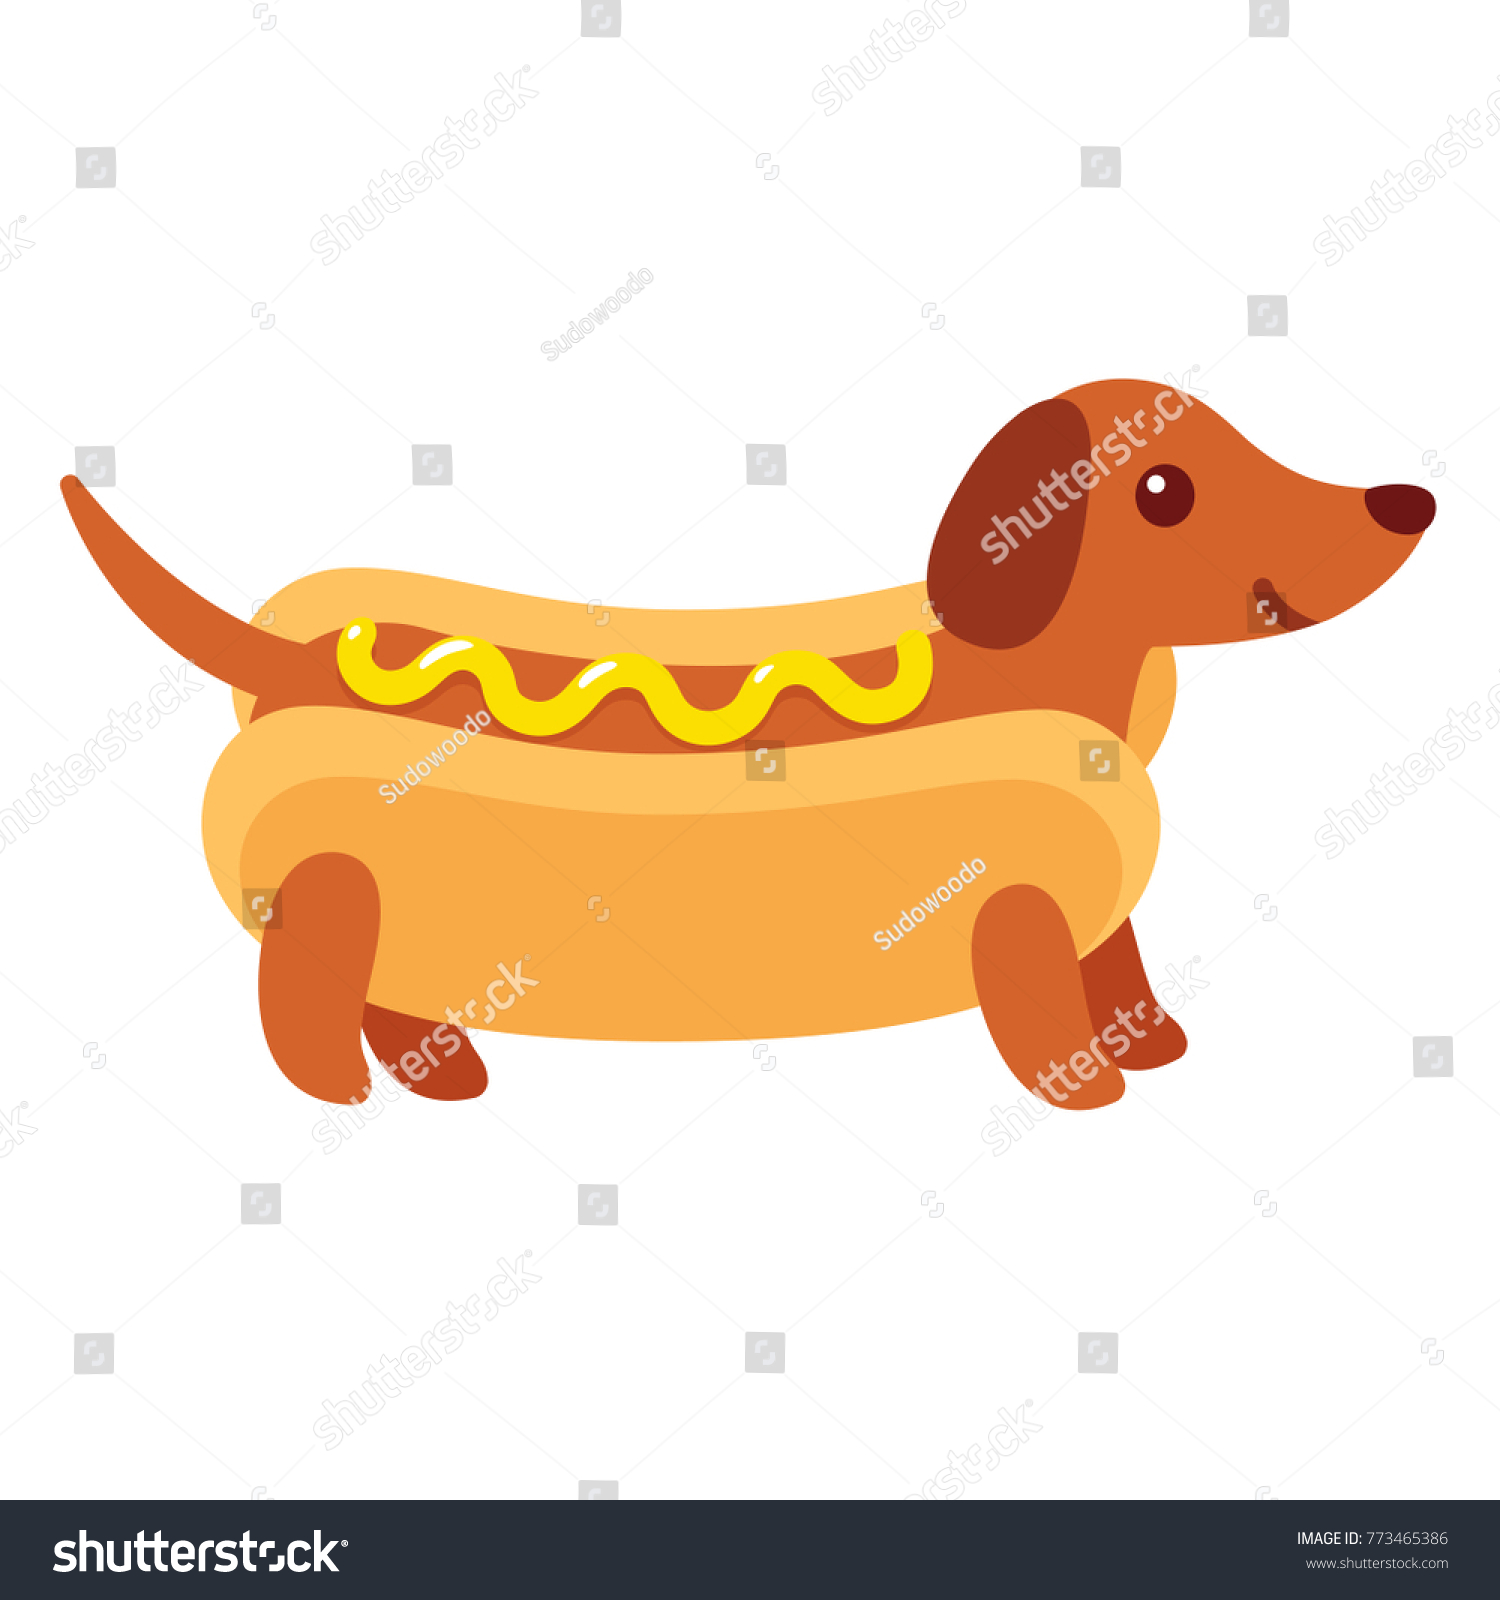 SVG of Dachshund puppy in hot dog bun with mustard, funny cartoon drawing. Cute Weiner dog vector illustration. svg